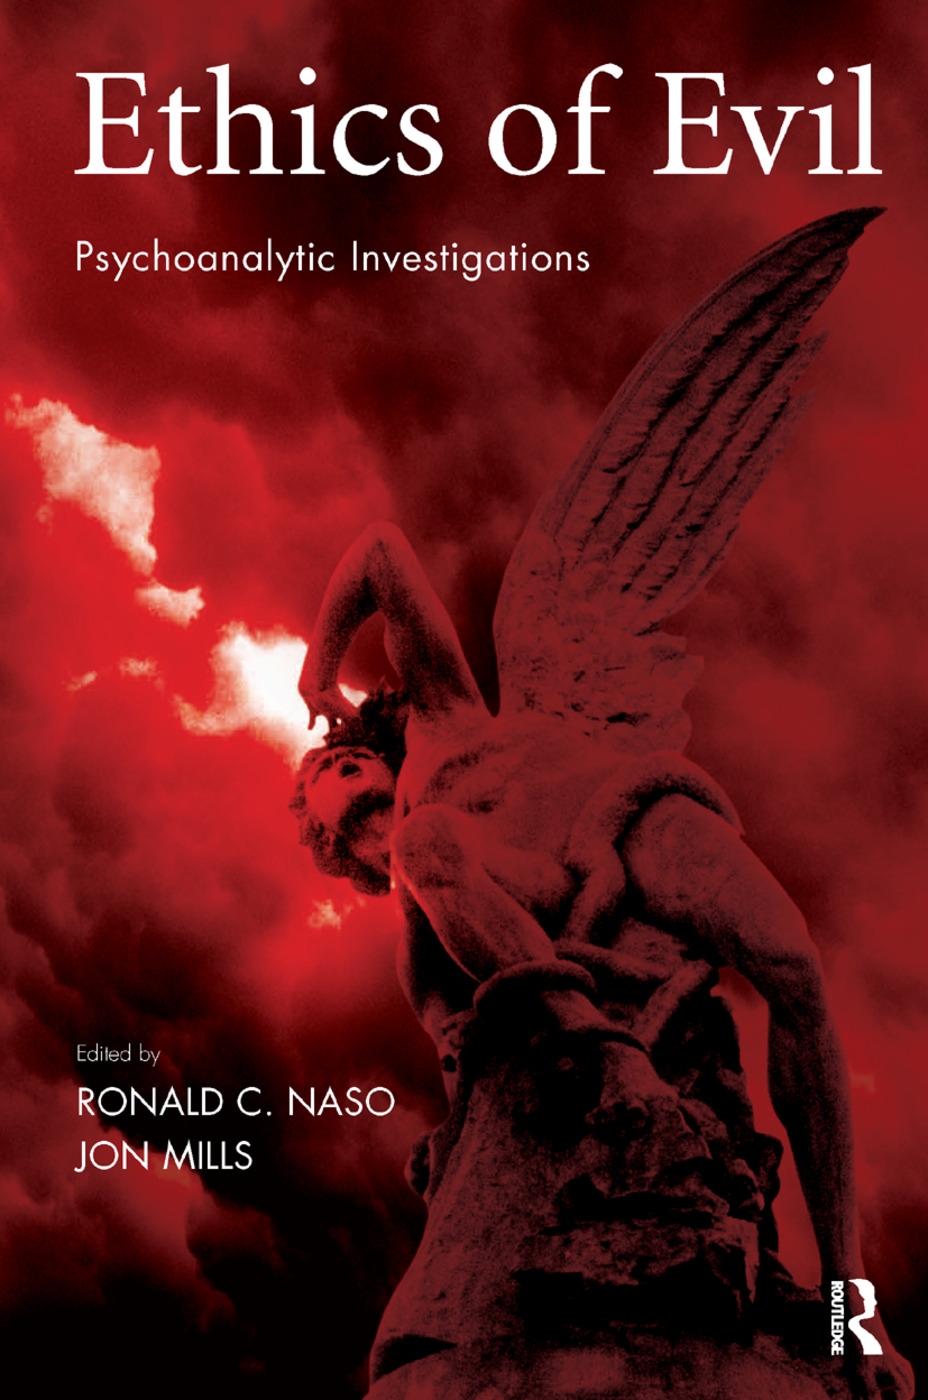 Ethics of Evil: Psychoanalytic Investigations